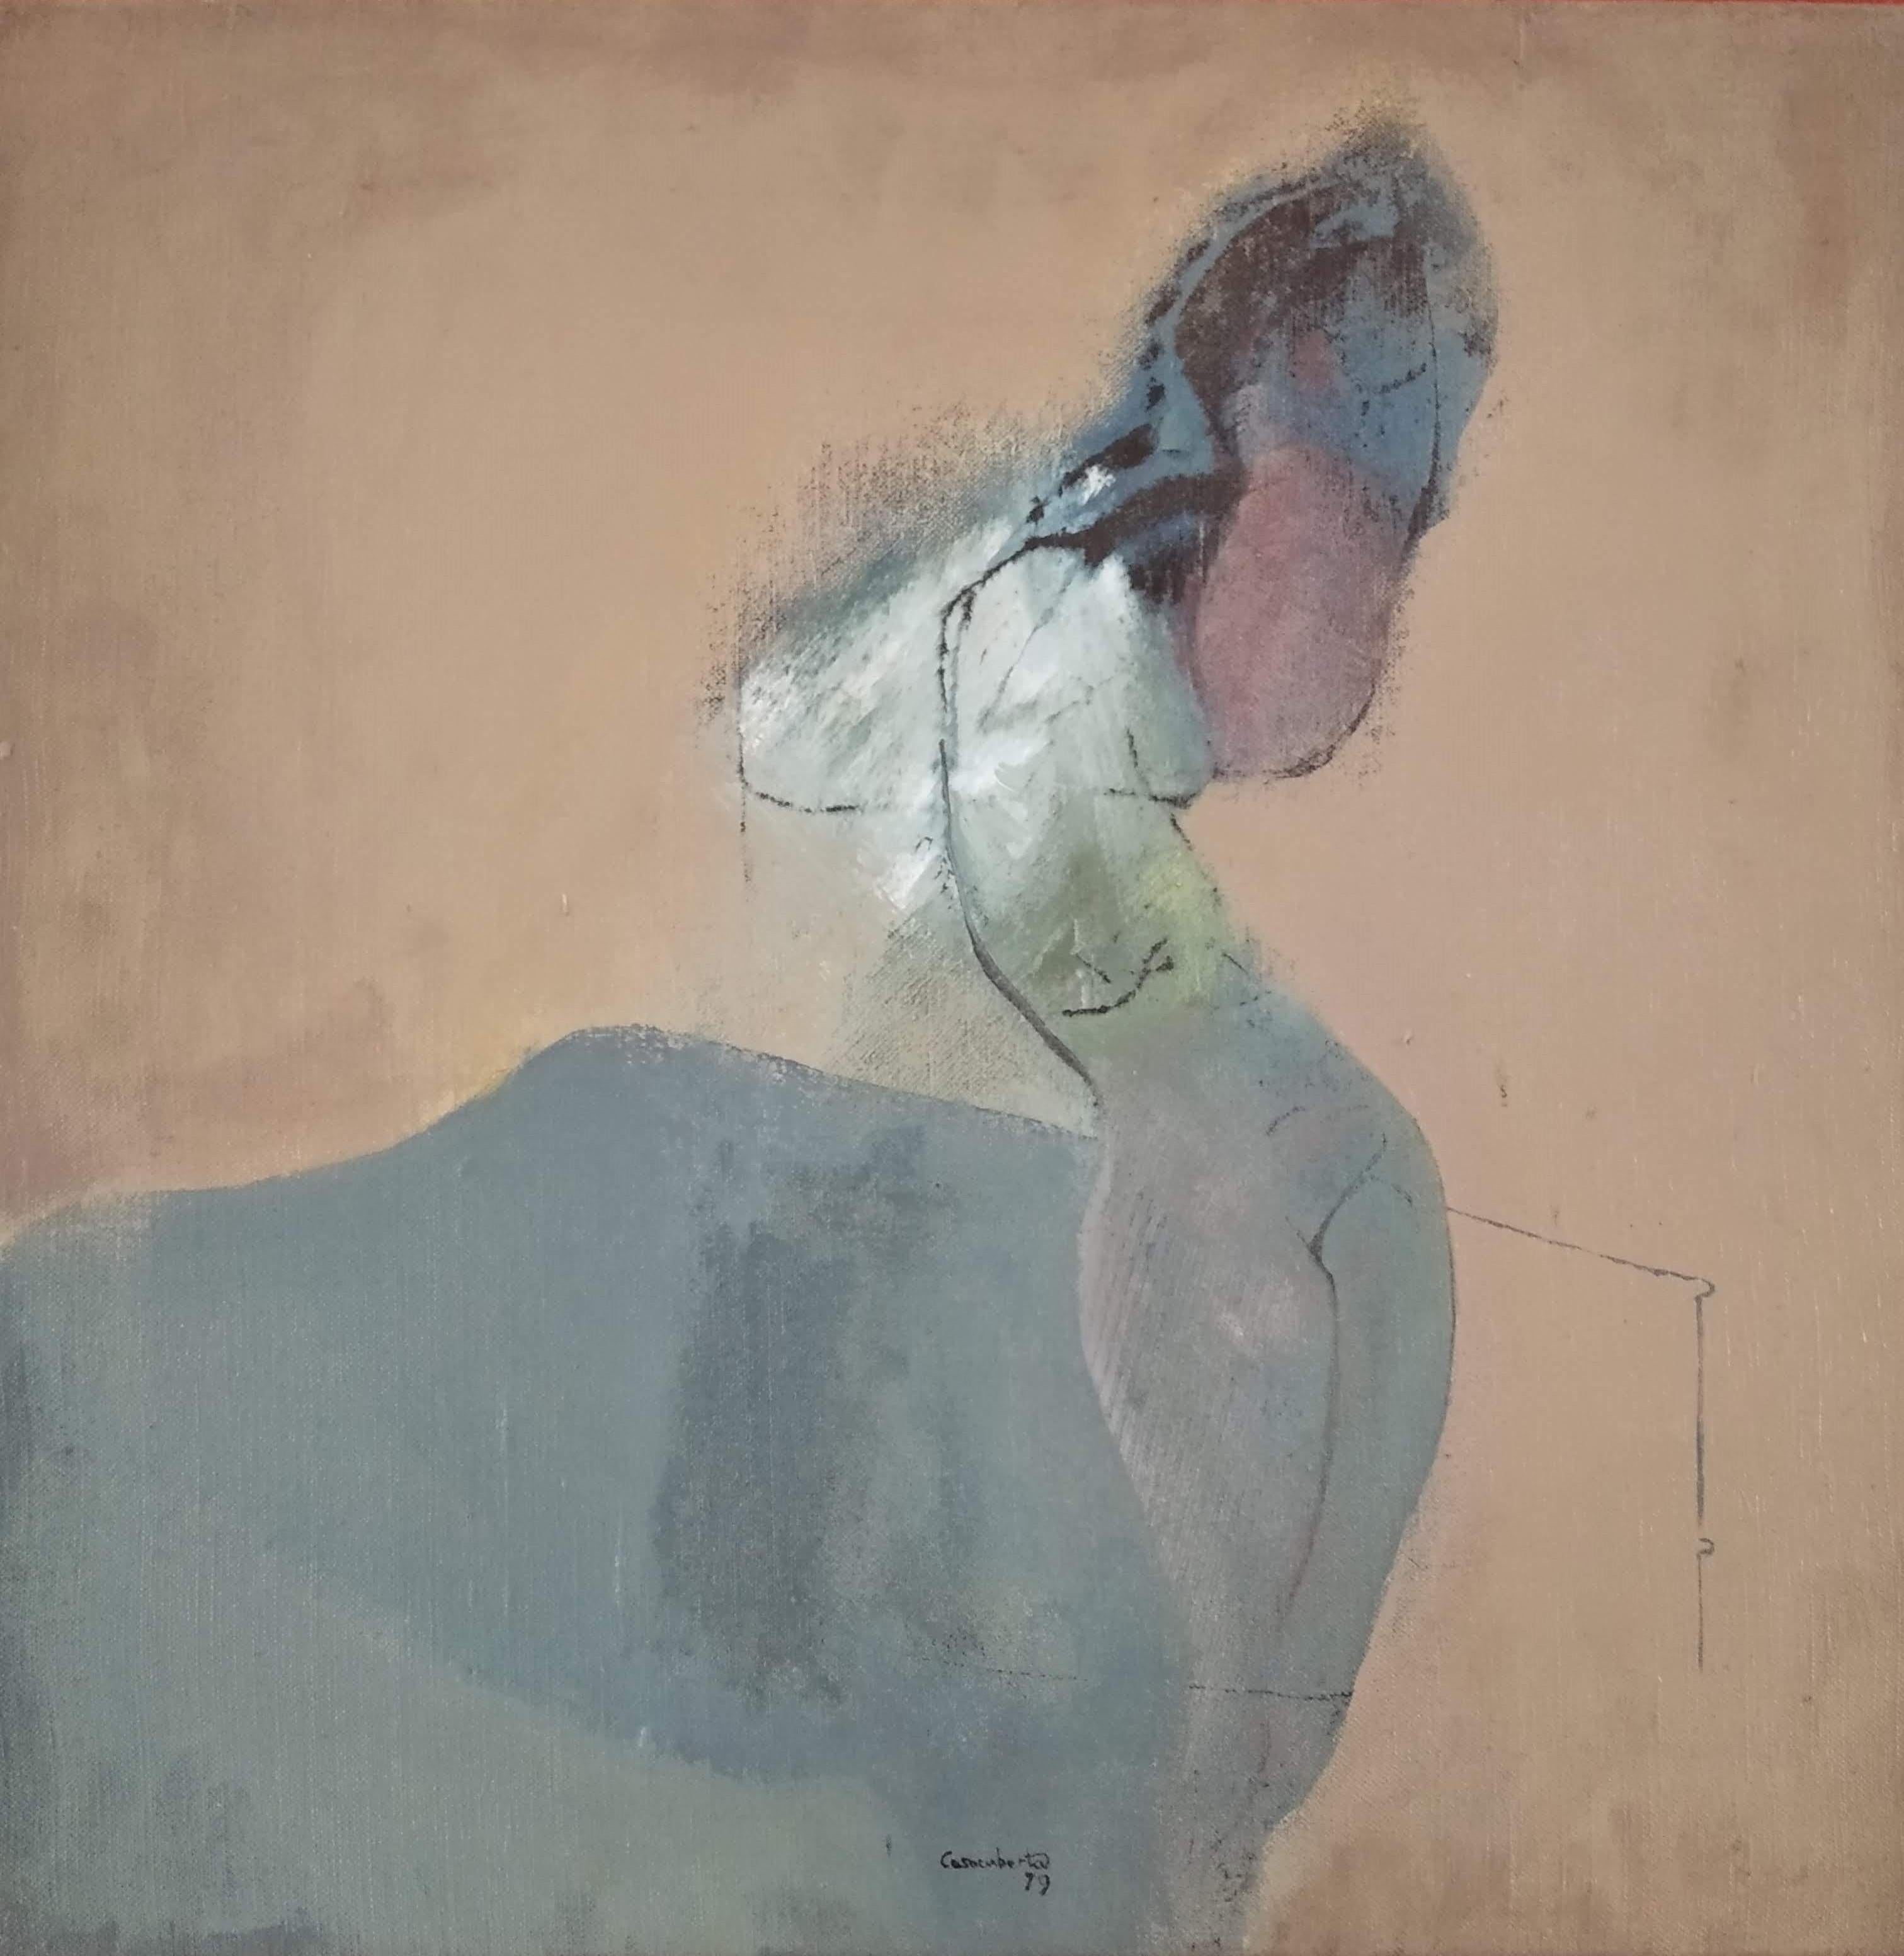 Eva al desnudo  - Painting by Jordi Casacuberta 